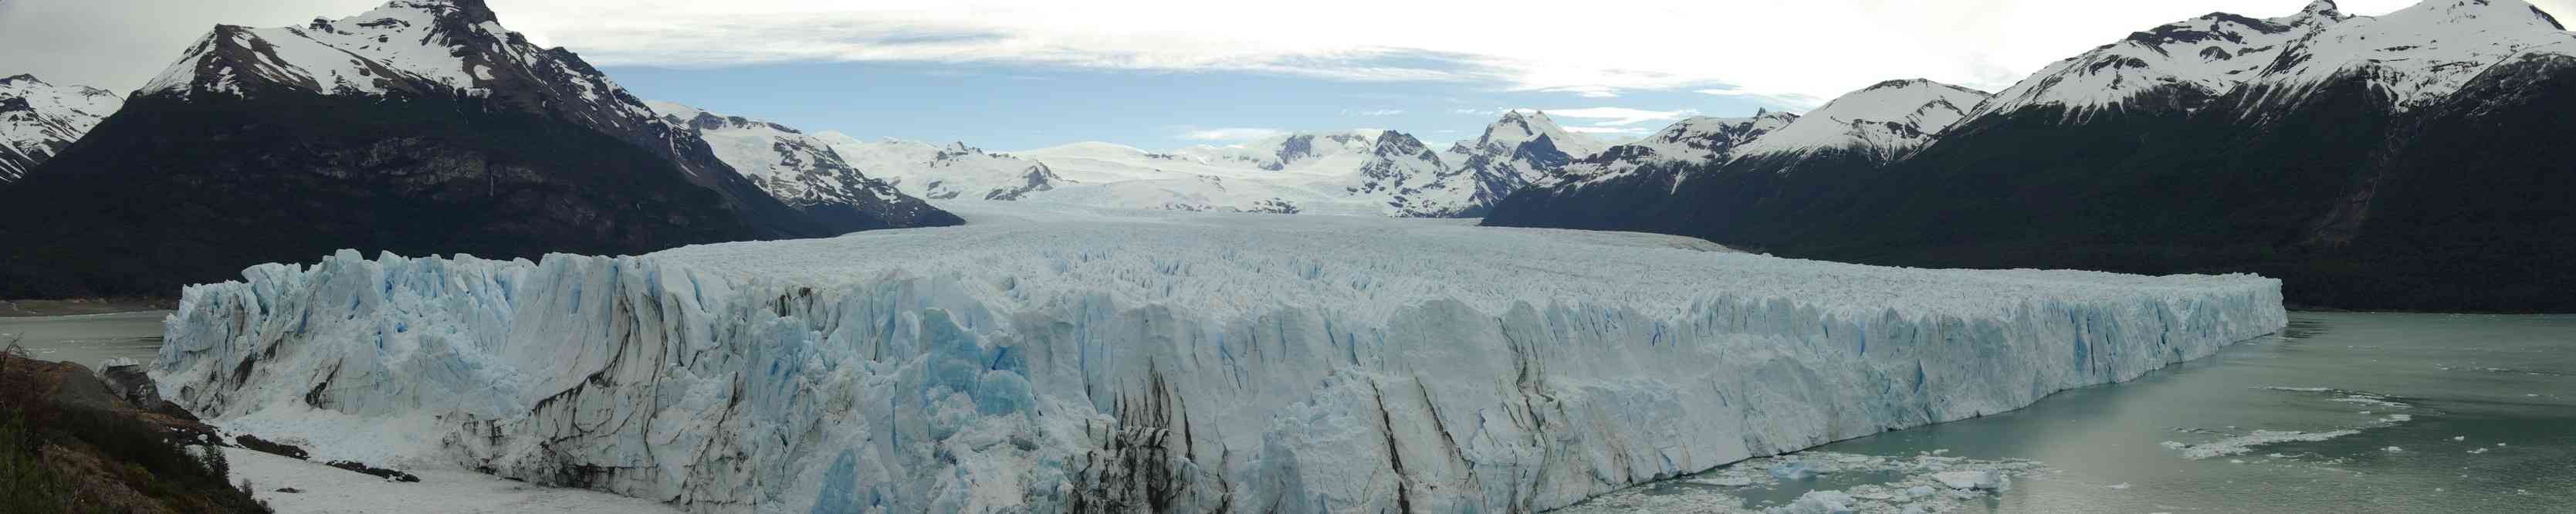 Le Perito Moreno et son cirque glaciaire, le 11 novembre 2012